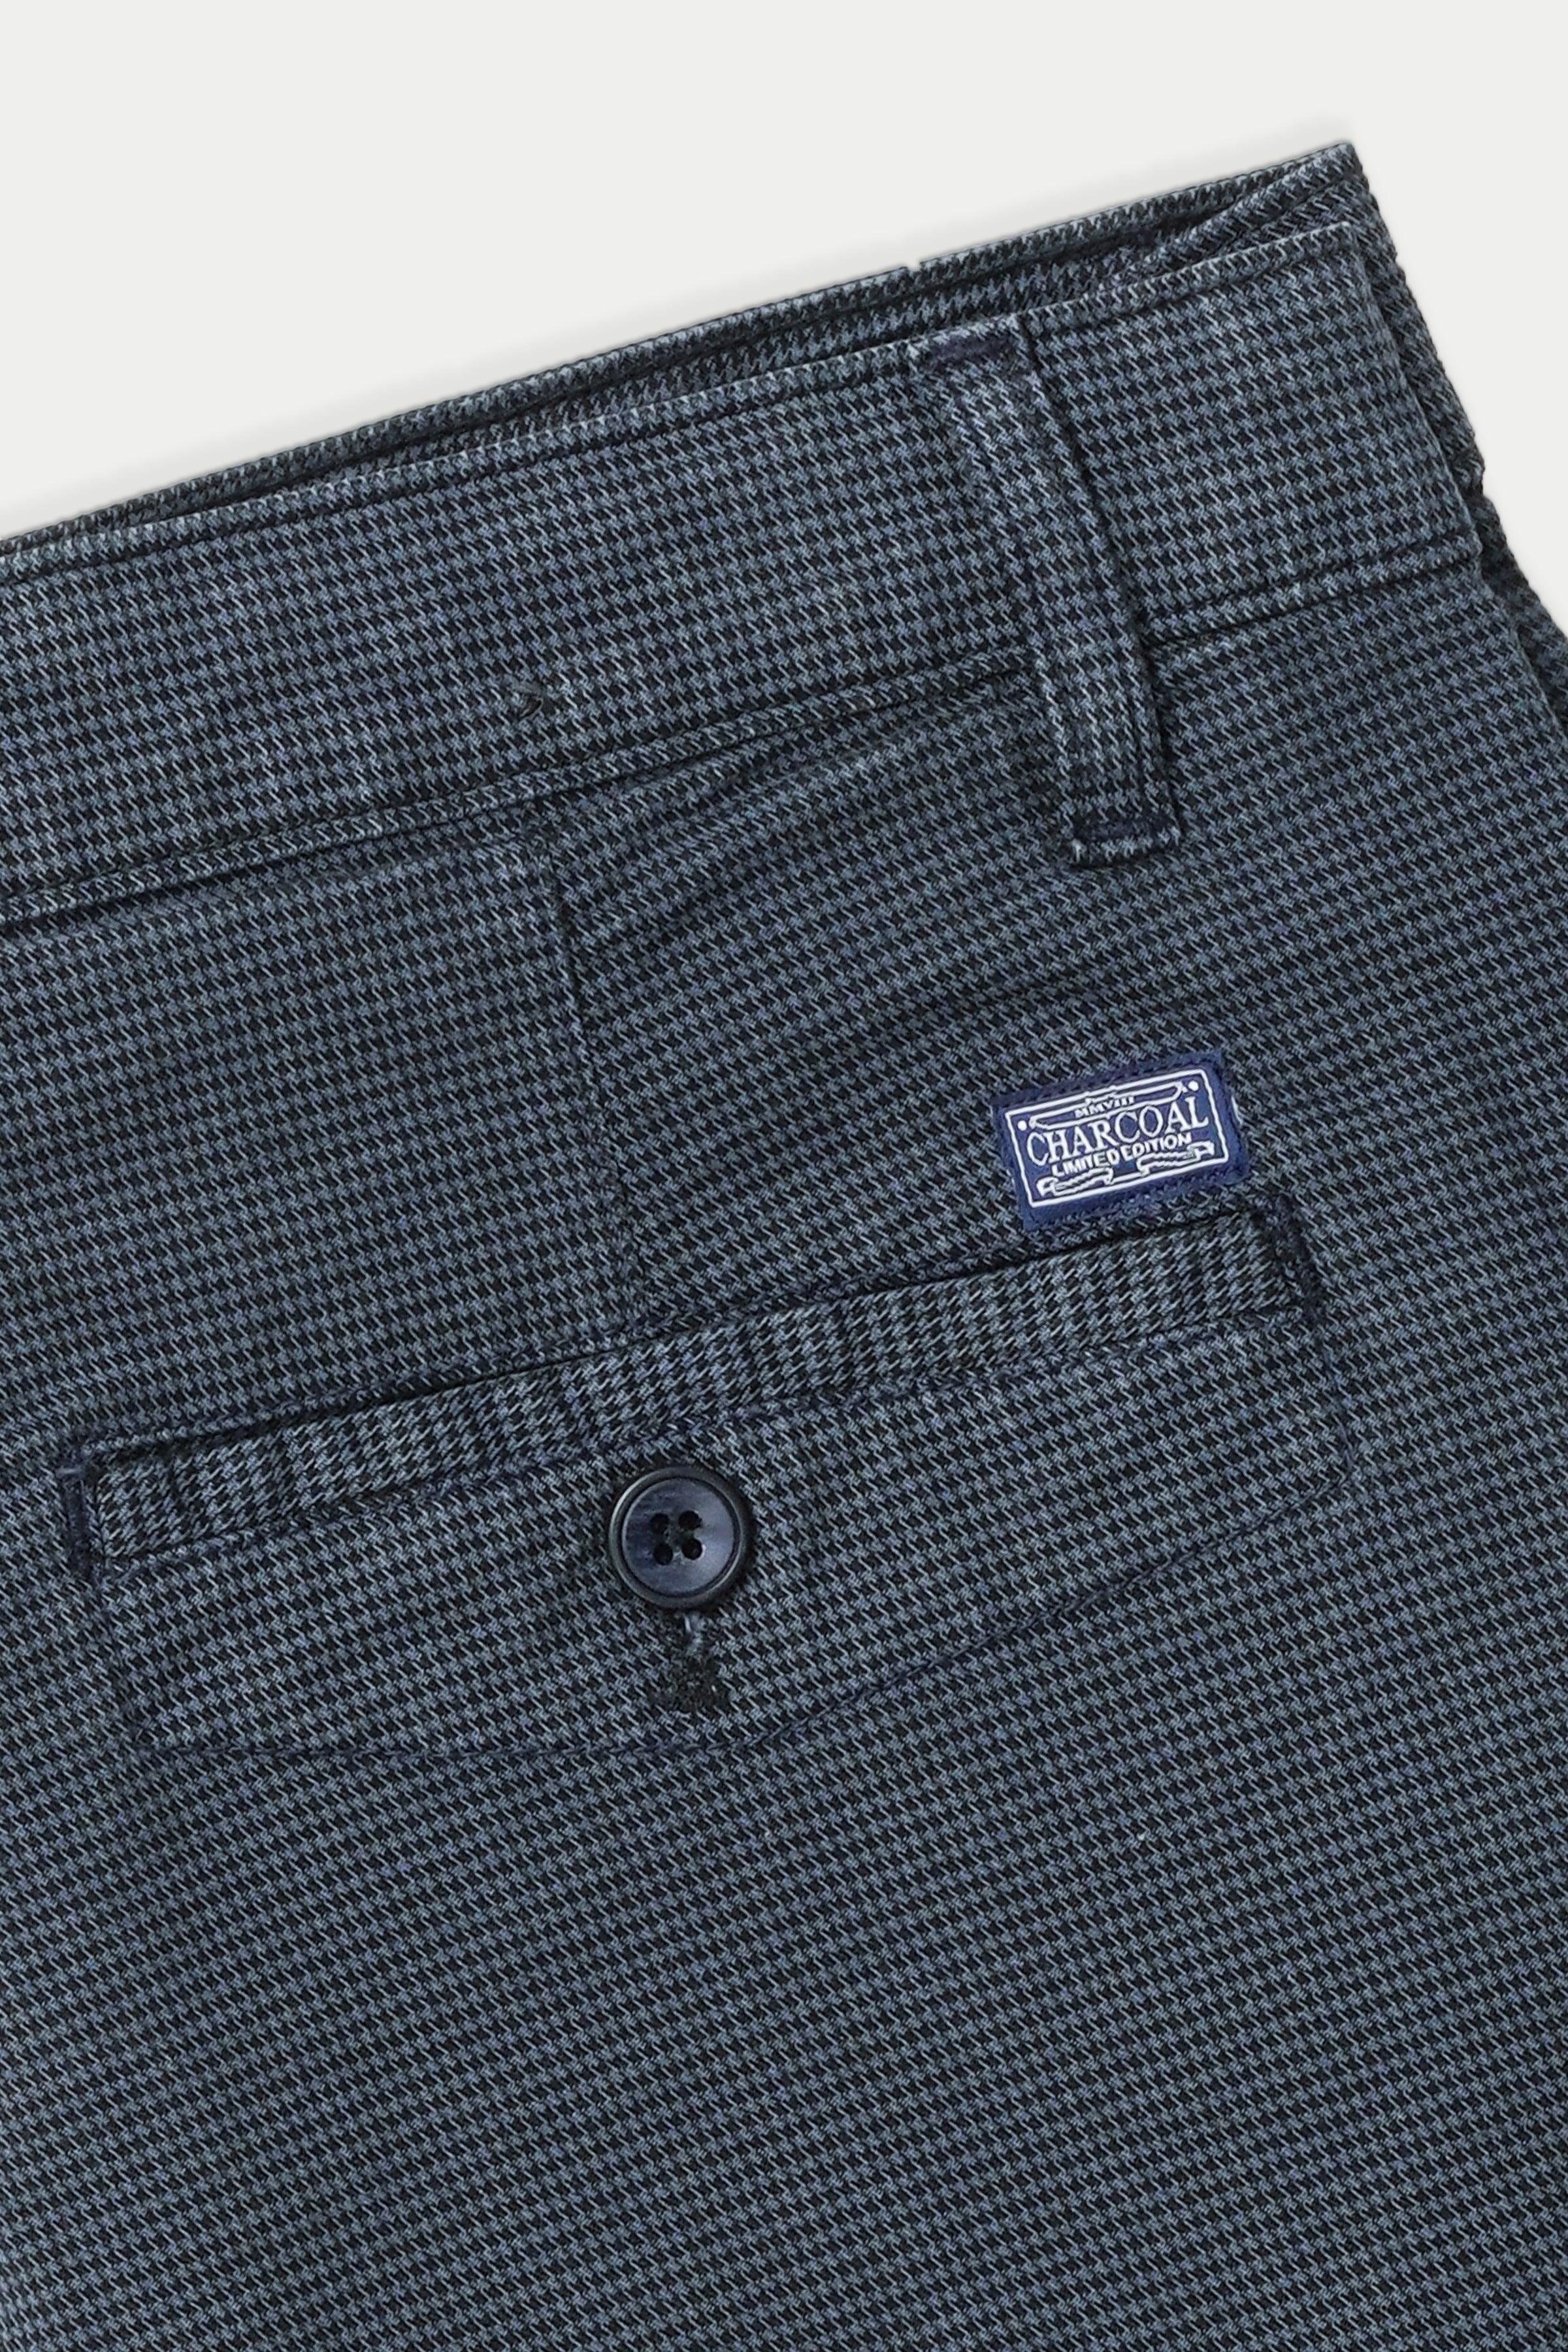 CASUAL PANT BLUE BLACK CHECK at Charcoal Clothing